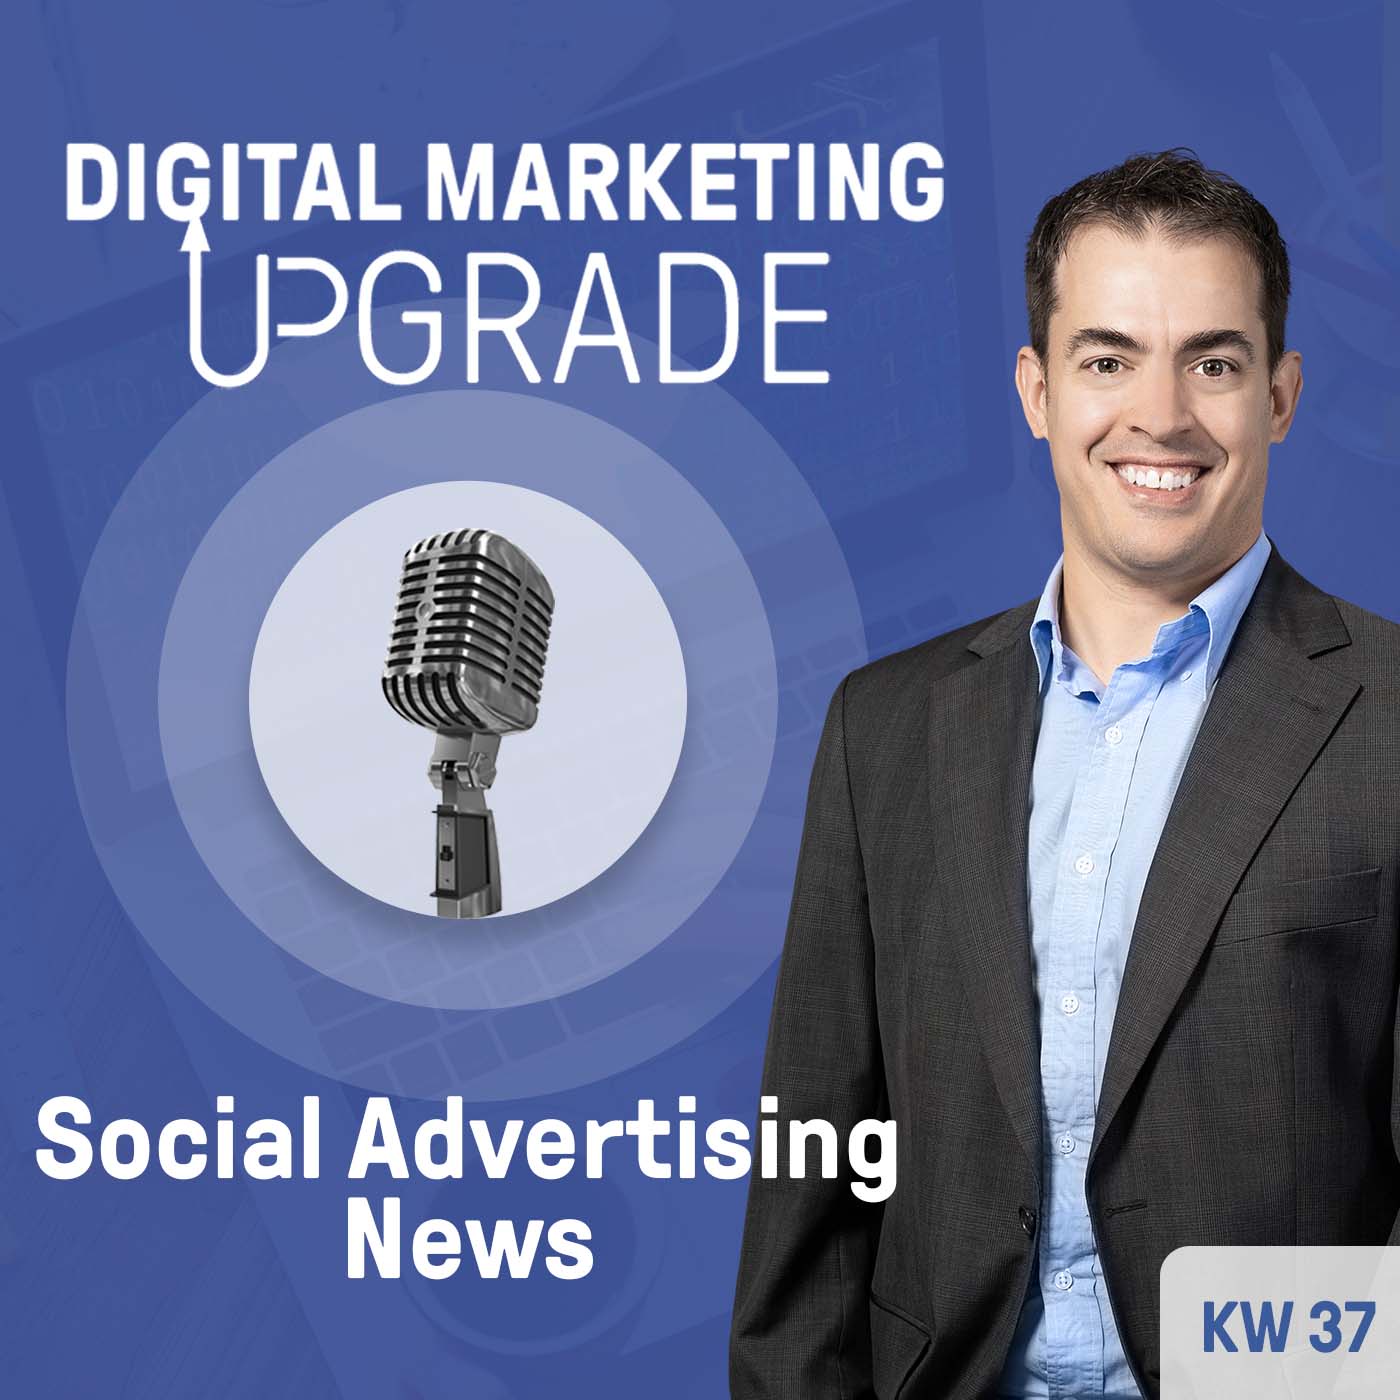 Social Advertising News - KW 37/23